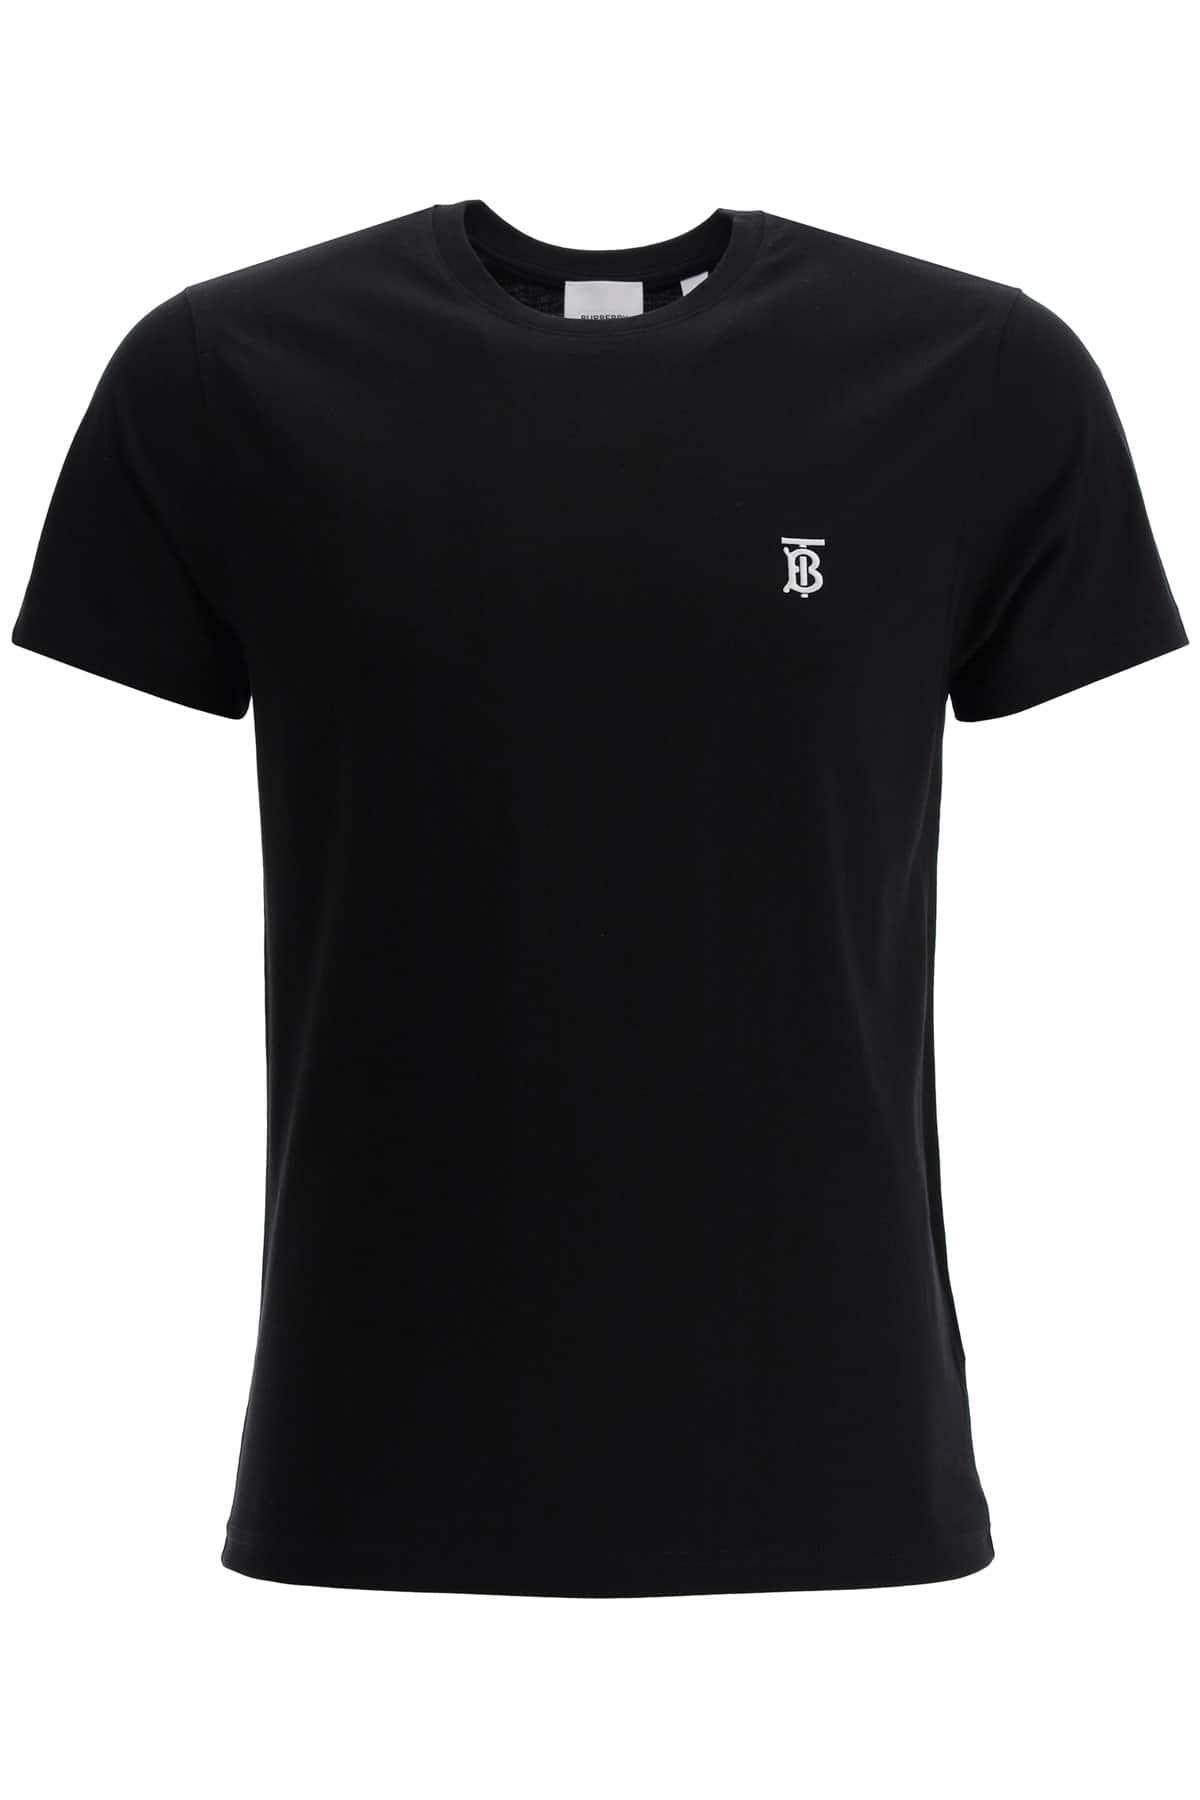 Burberry Cotton Tb Monogram T-shirt in Black for Men - Lyst